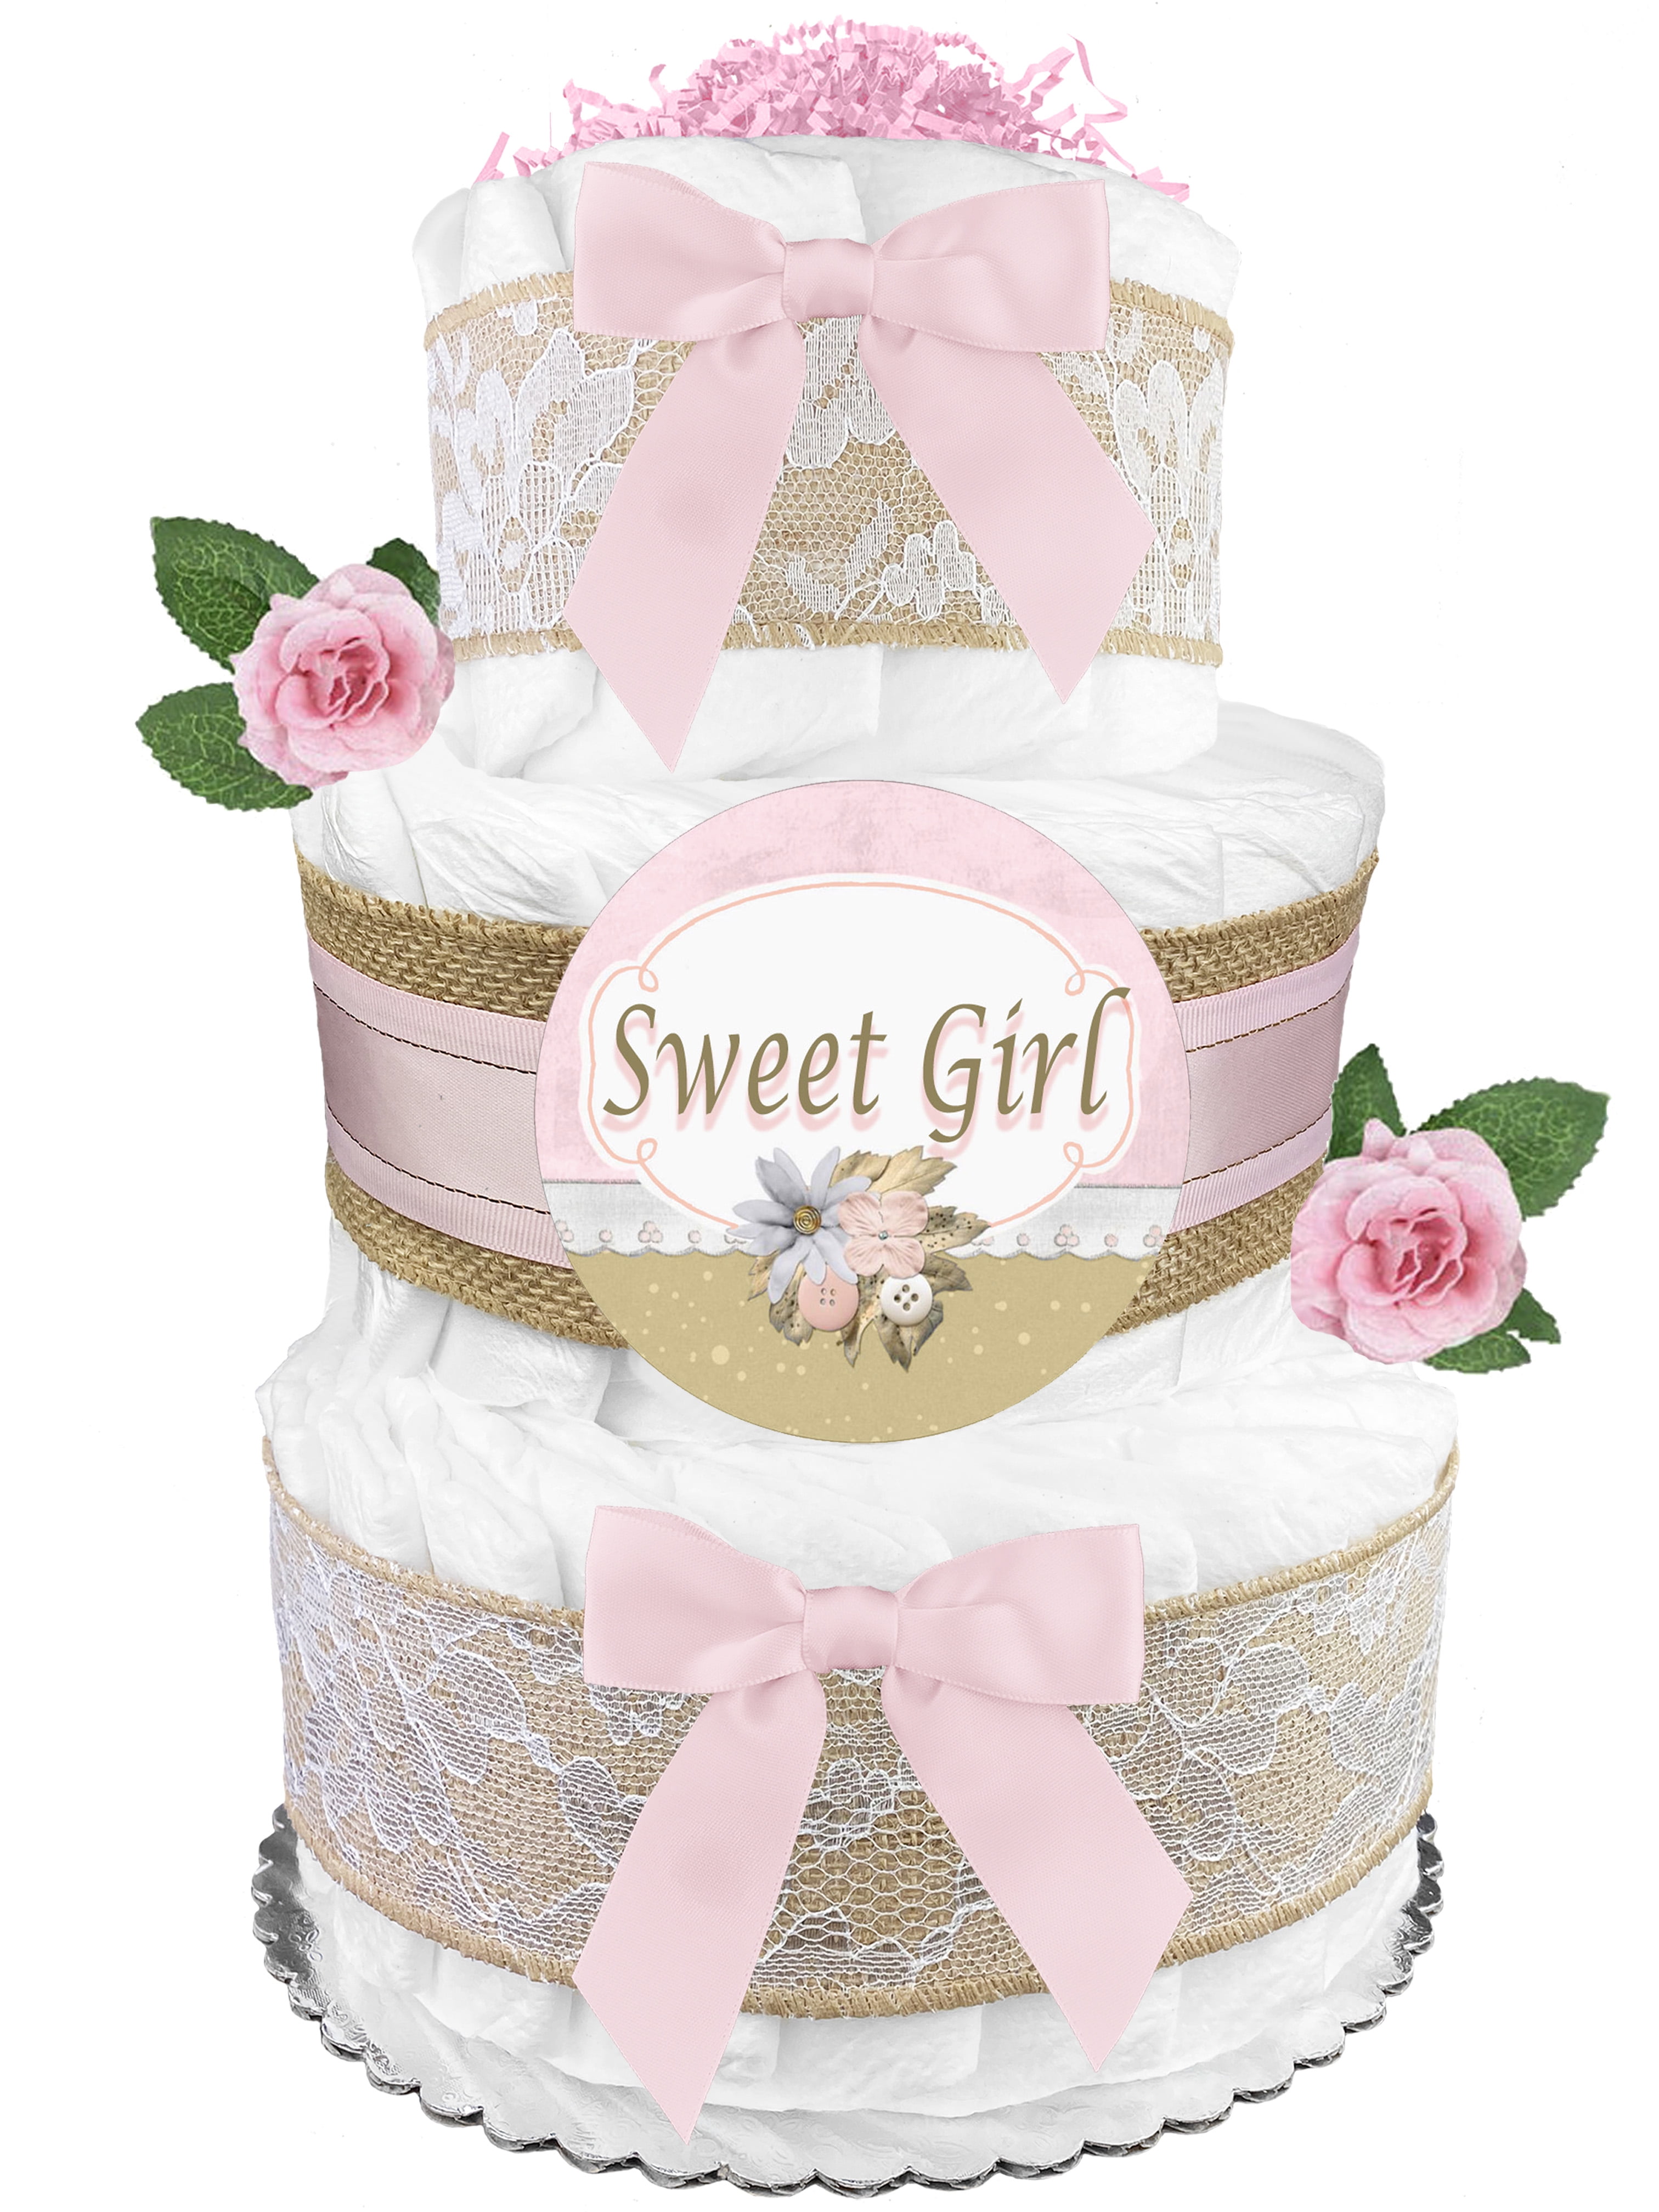 Baby Girl Baby Shower Centerpiece 3 Tier Diaper Cake Pink/Silver Chevron 